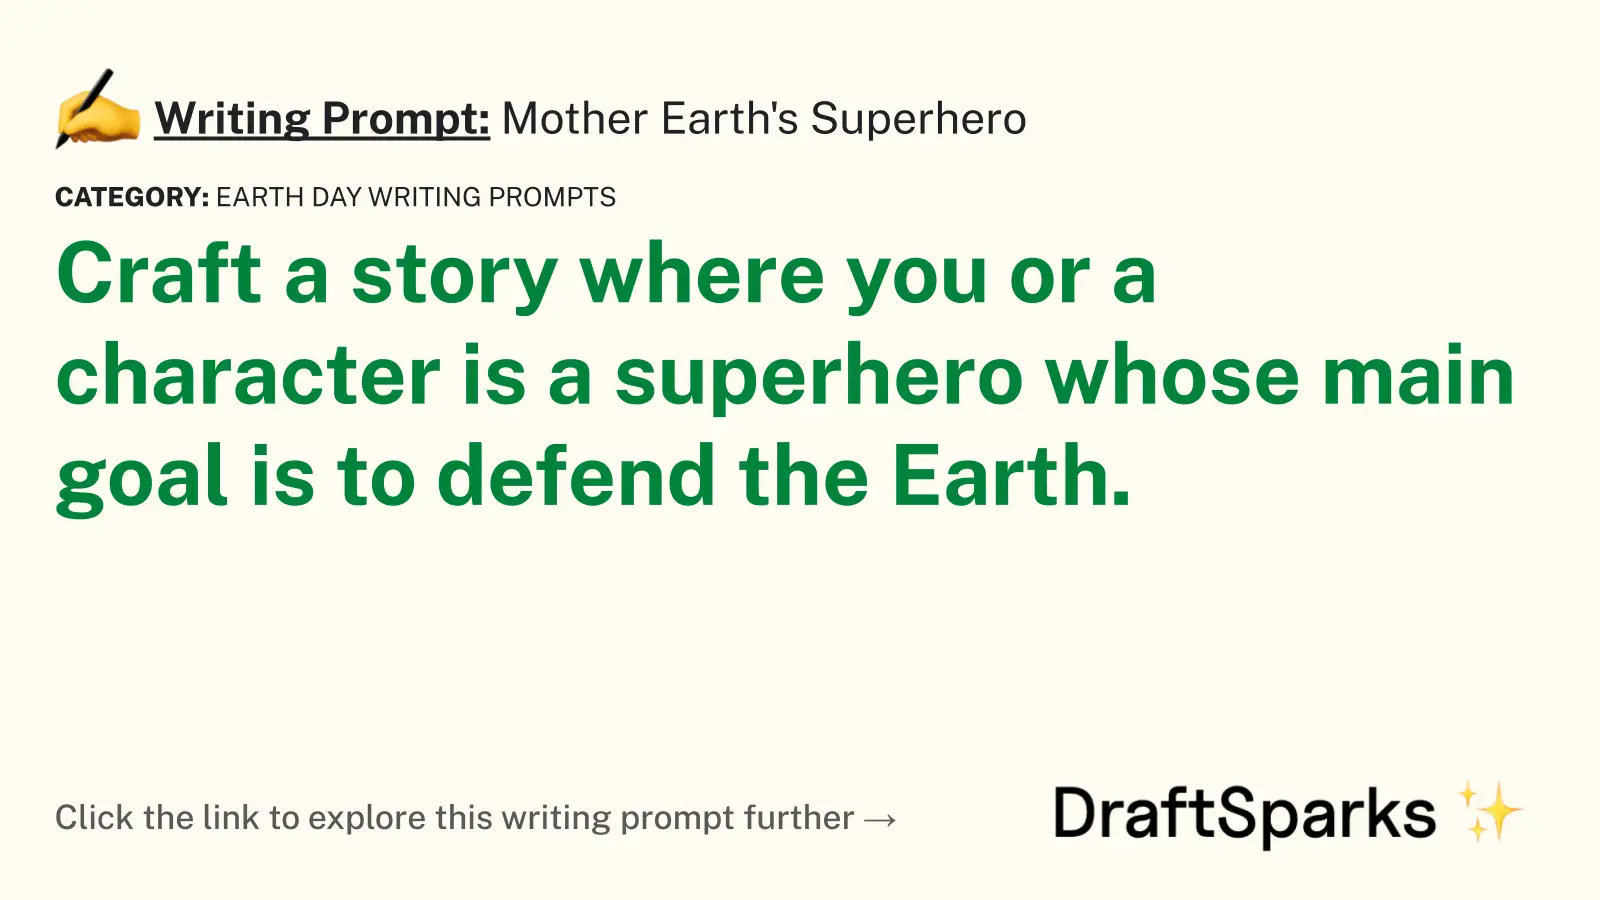 Mother Earth’s Superhero